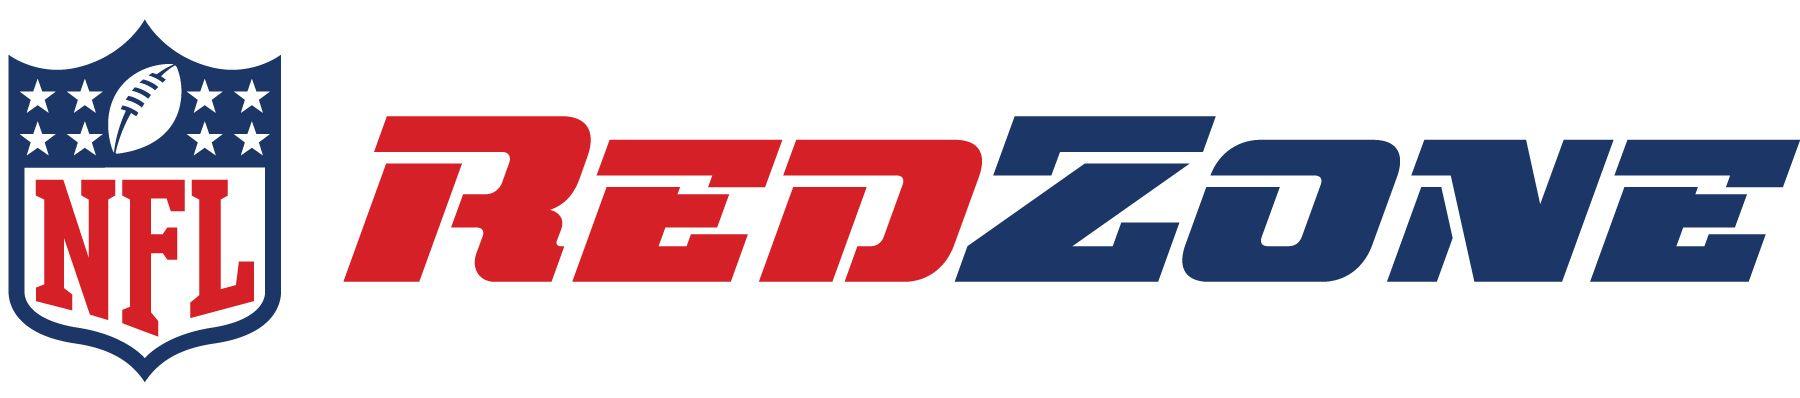 NFL RedZone Logo - BEK Communications